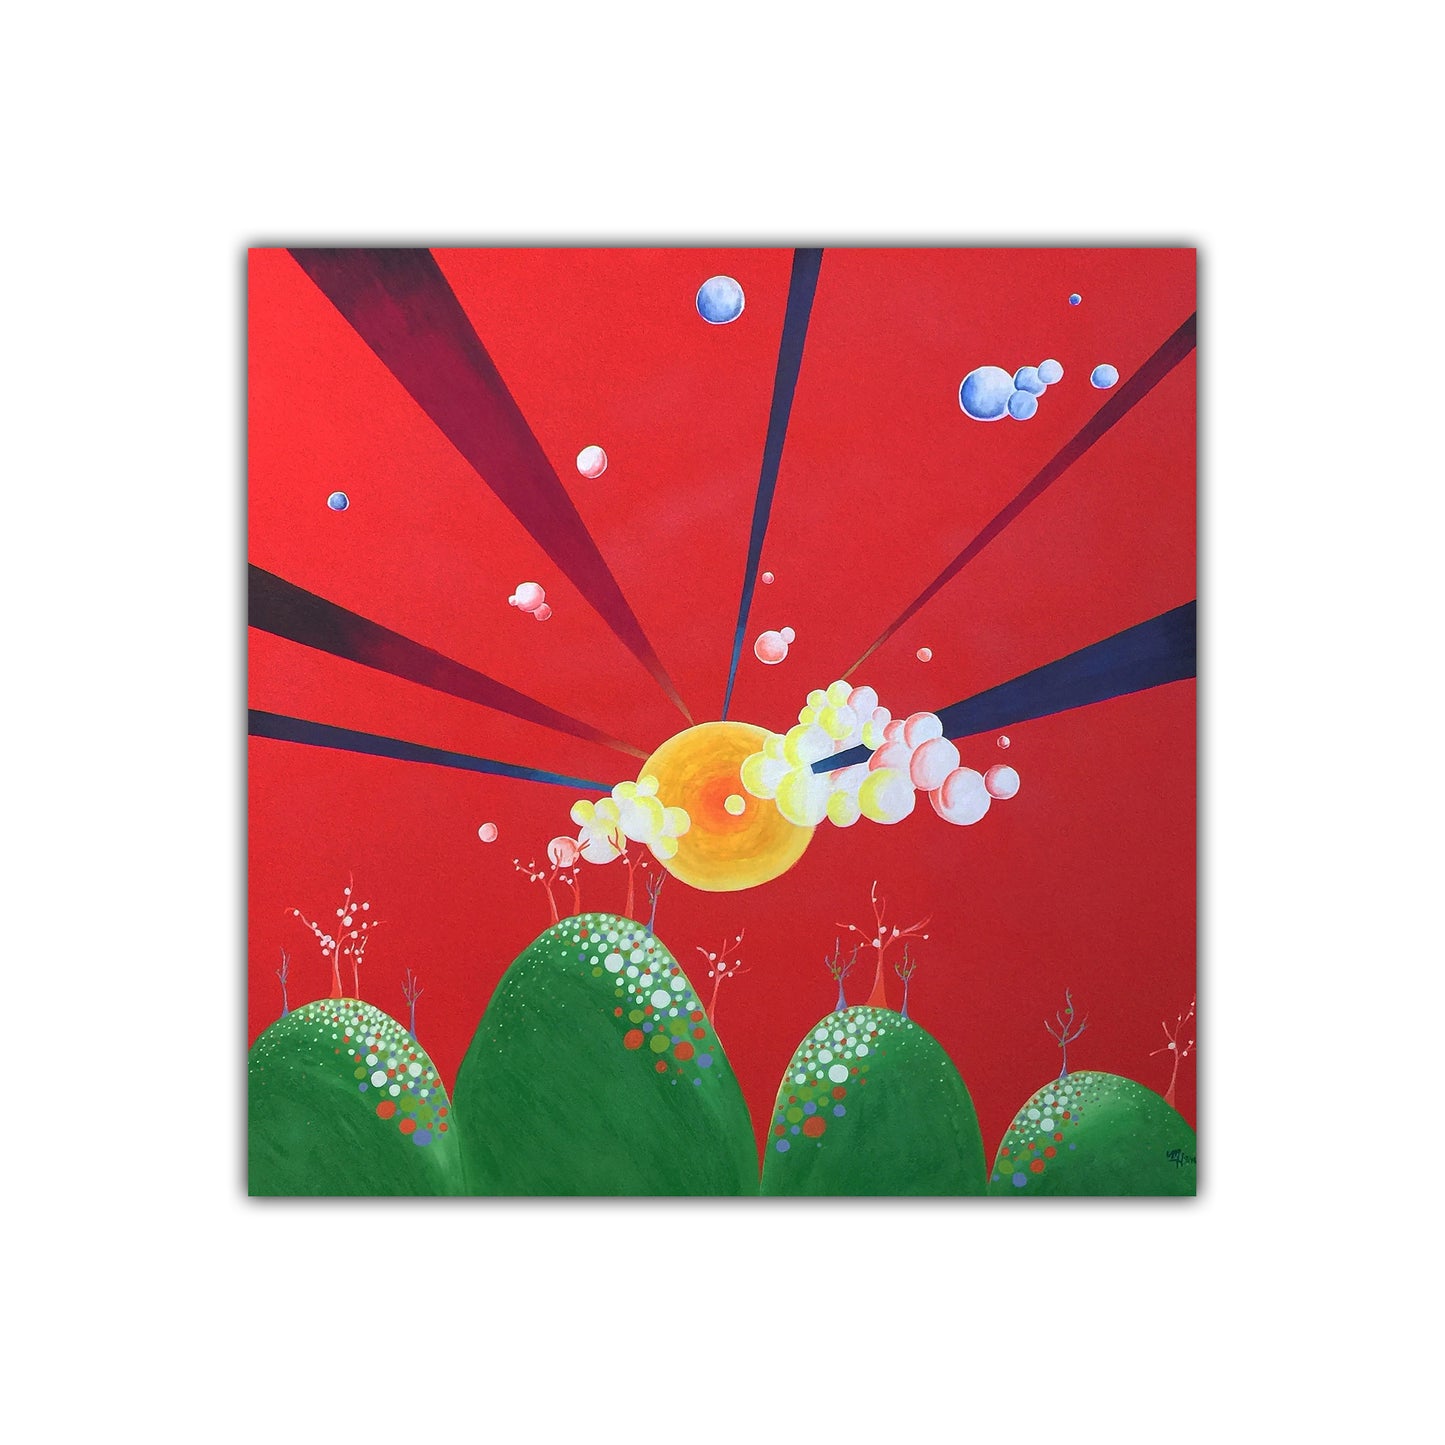 Bubble Knoll-Blank Greeting Card - marjorieblume